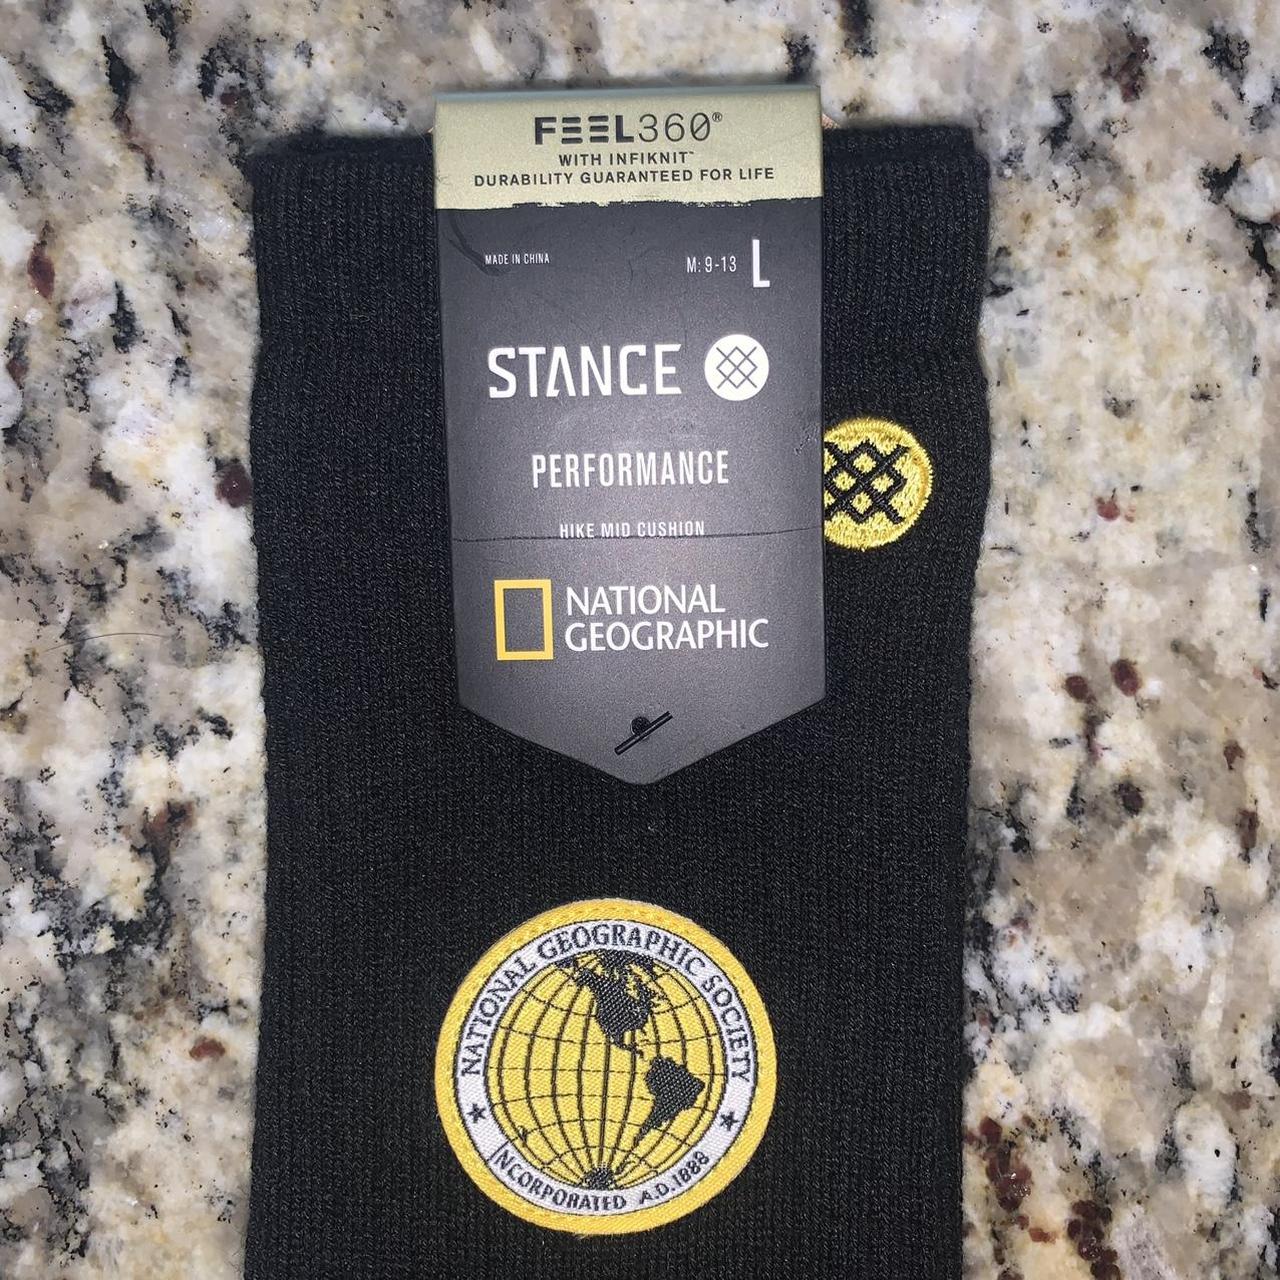 Stance Men's Black and Yellow Socks (2)